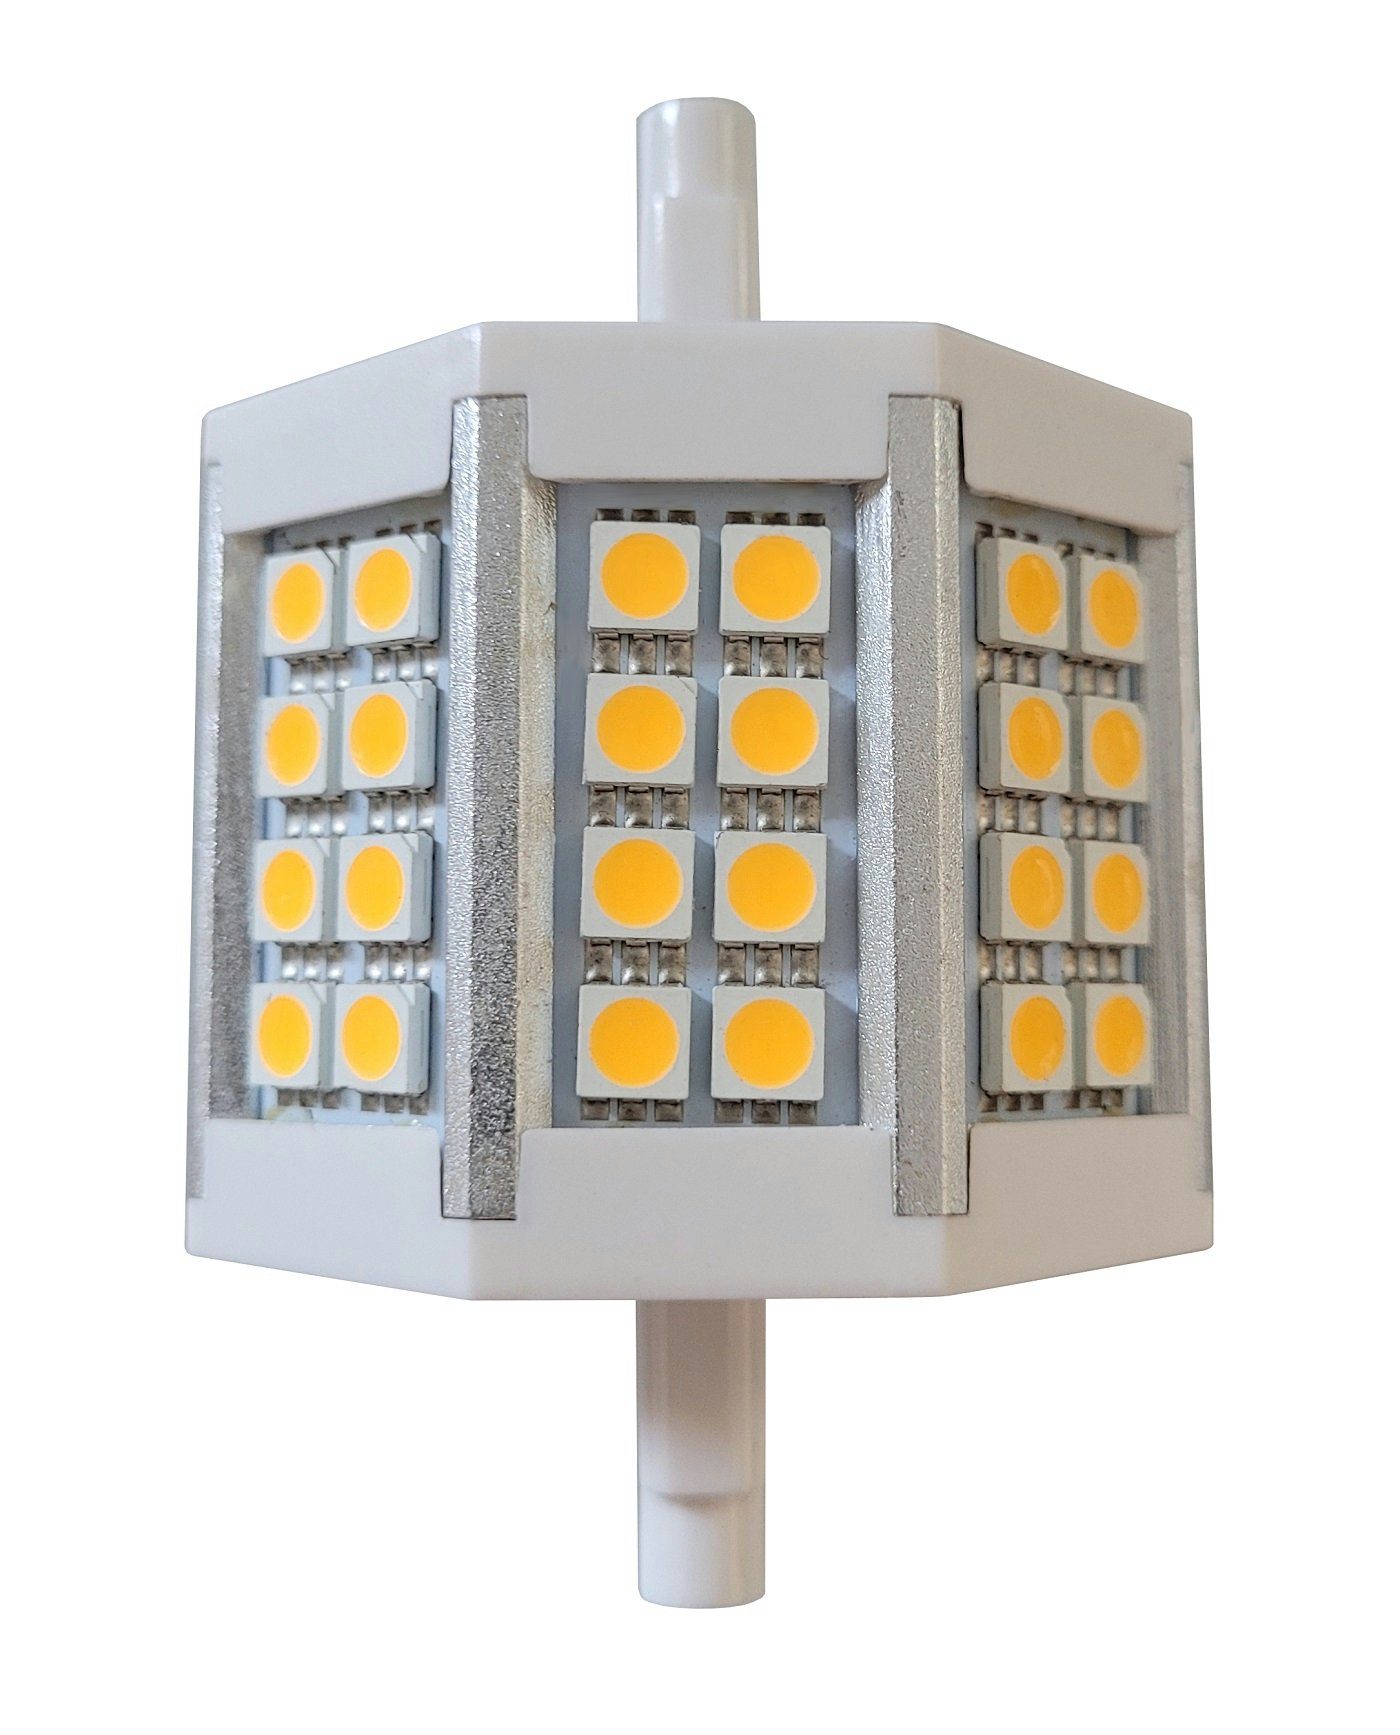 Stablampe RX7S 1 4W Provance kaltweiß LED-Leuchtmittel 420 R7s, St., J78 K, LED 6500 Lumen